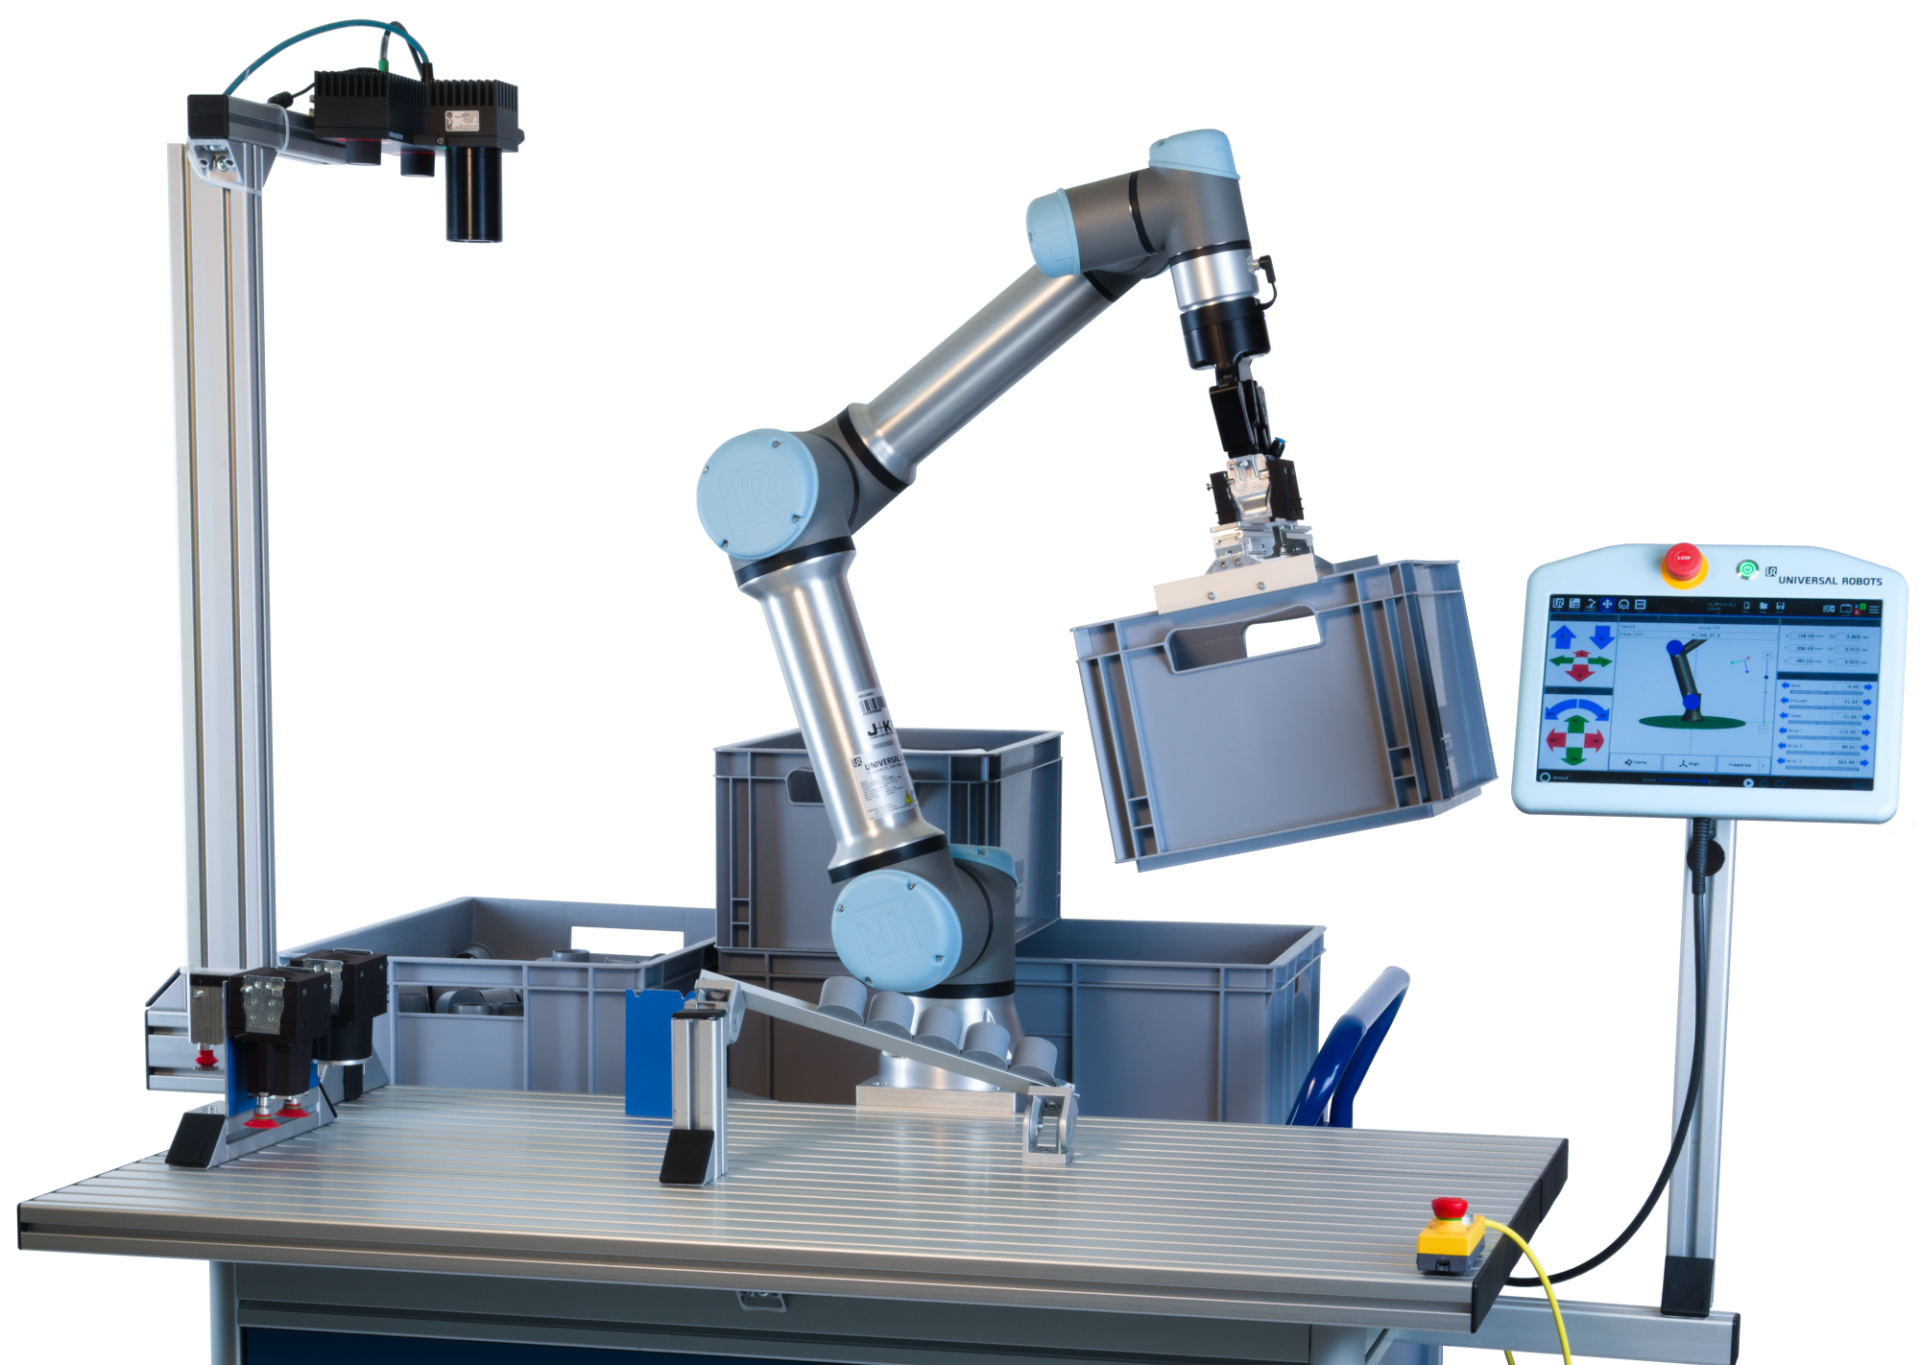 Flexible Automatisierung mit den Leverage Robotics ToolCubes in Roboter-Multi-Task-Applikationen